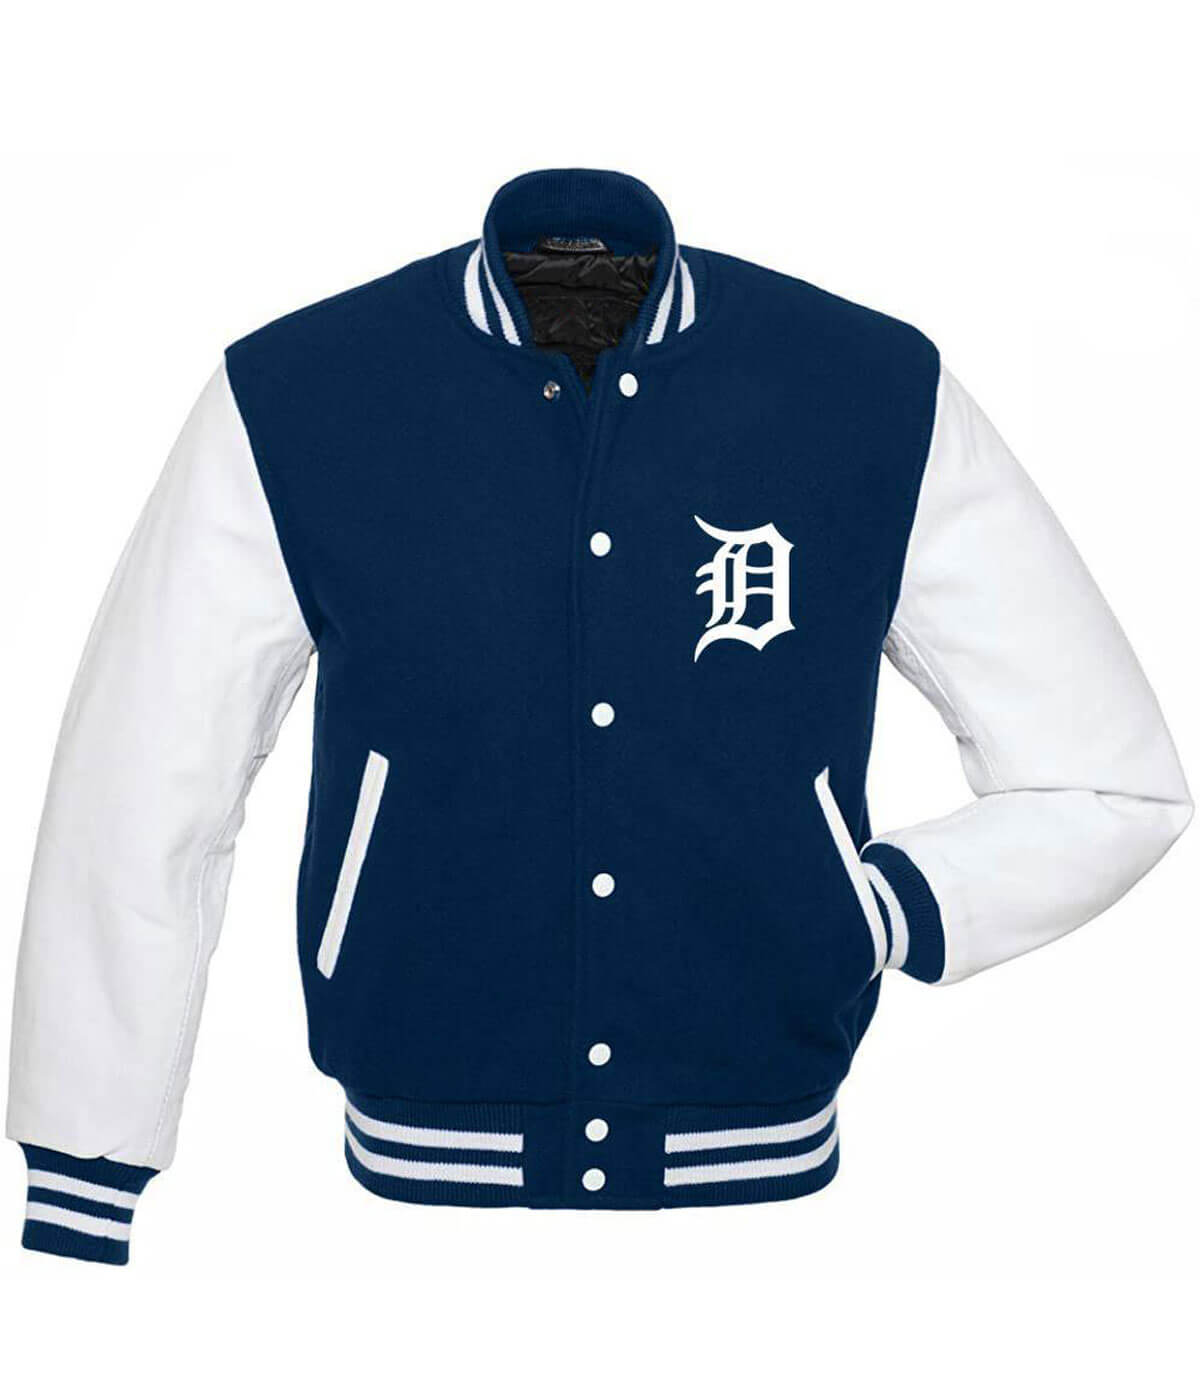 Maker of Jacket MLB Detroit Tigers Blue White Letterman Varsity